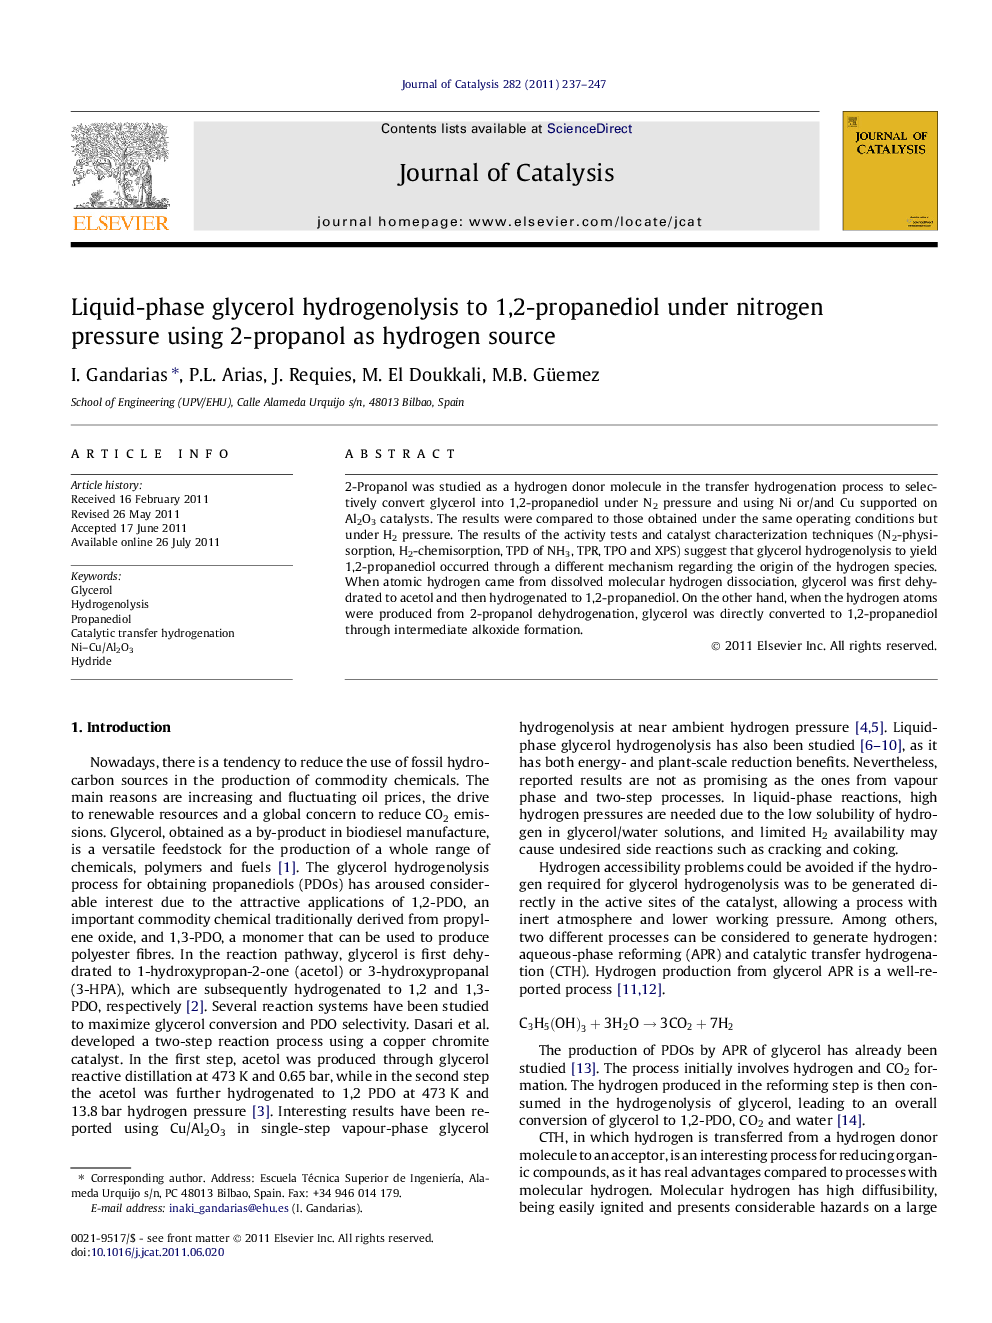 Liquid-phase glycerol hydrogenolysis to 1,2-propanediol under nitrogen pressure using 2-propanol as hydrogen source